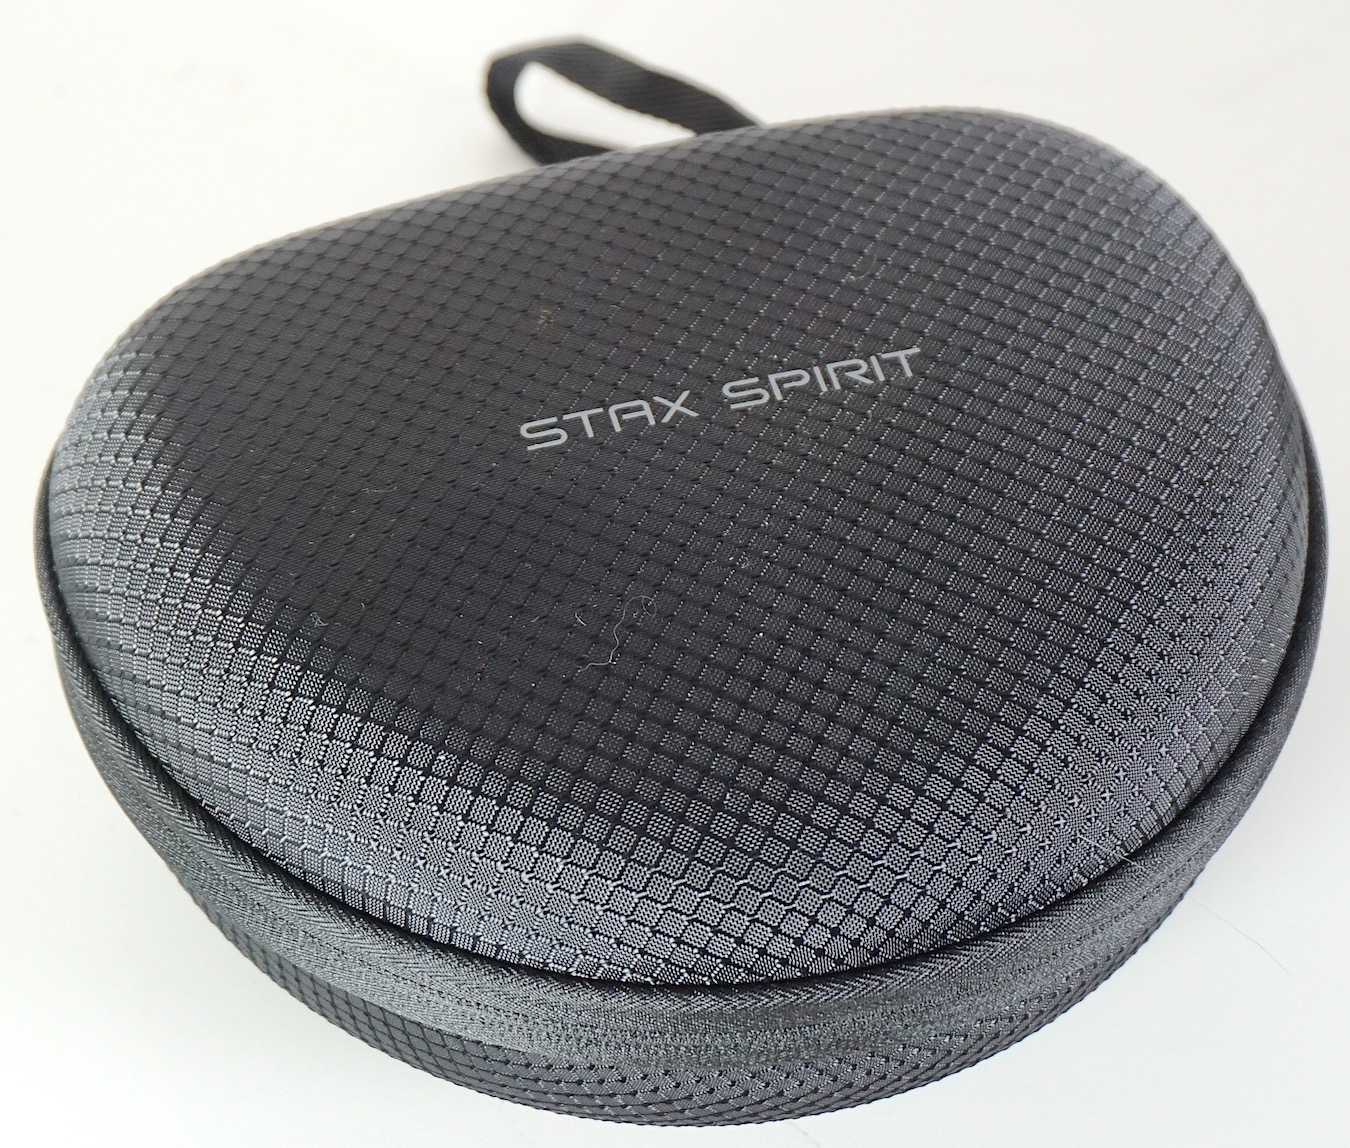 SPIRIT S3 HEADPHONES FROM STAX